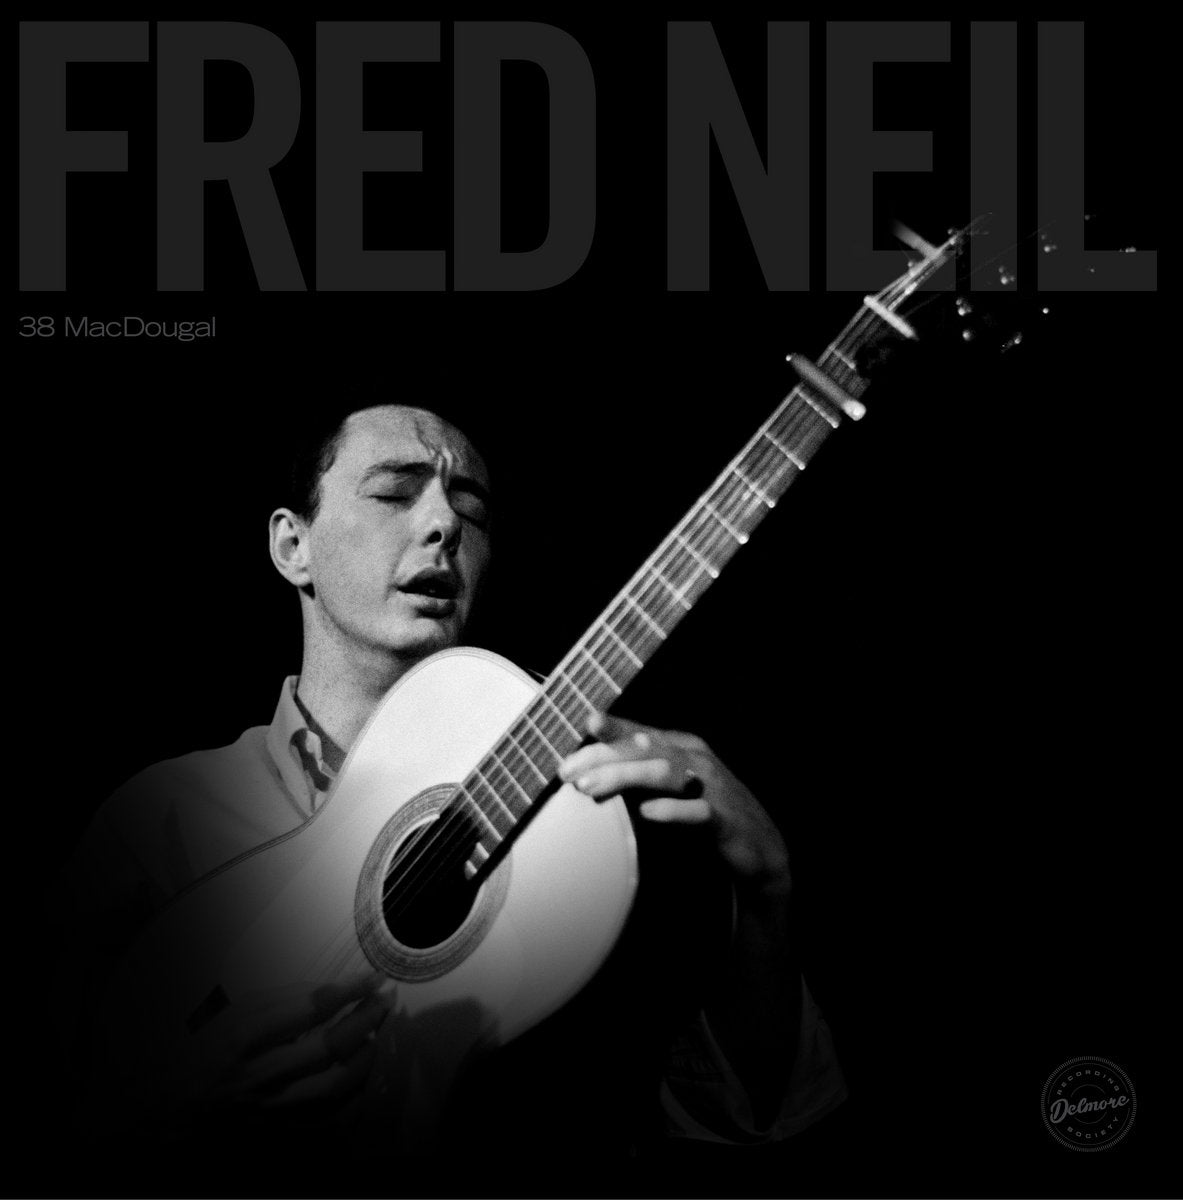 Fred Neil - 38 MacDougal (Delmore Recording Society)